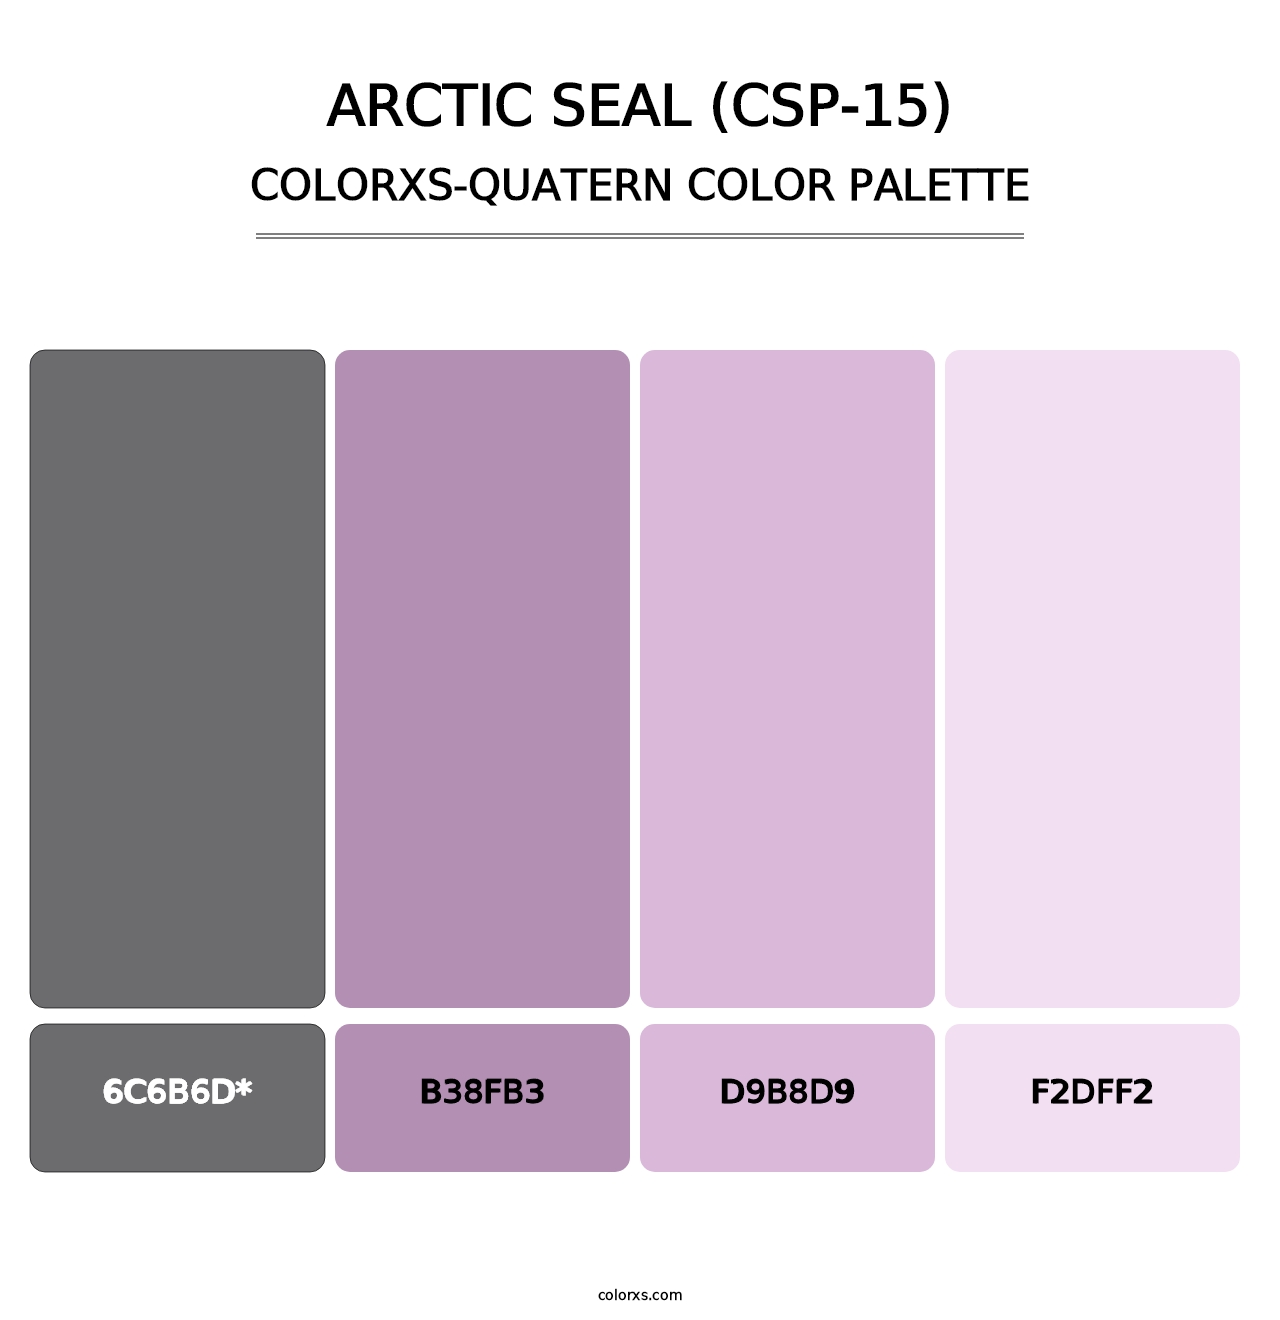 Arctic Seal (CSP-15) - Colorxs Quatern Palette